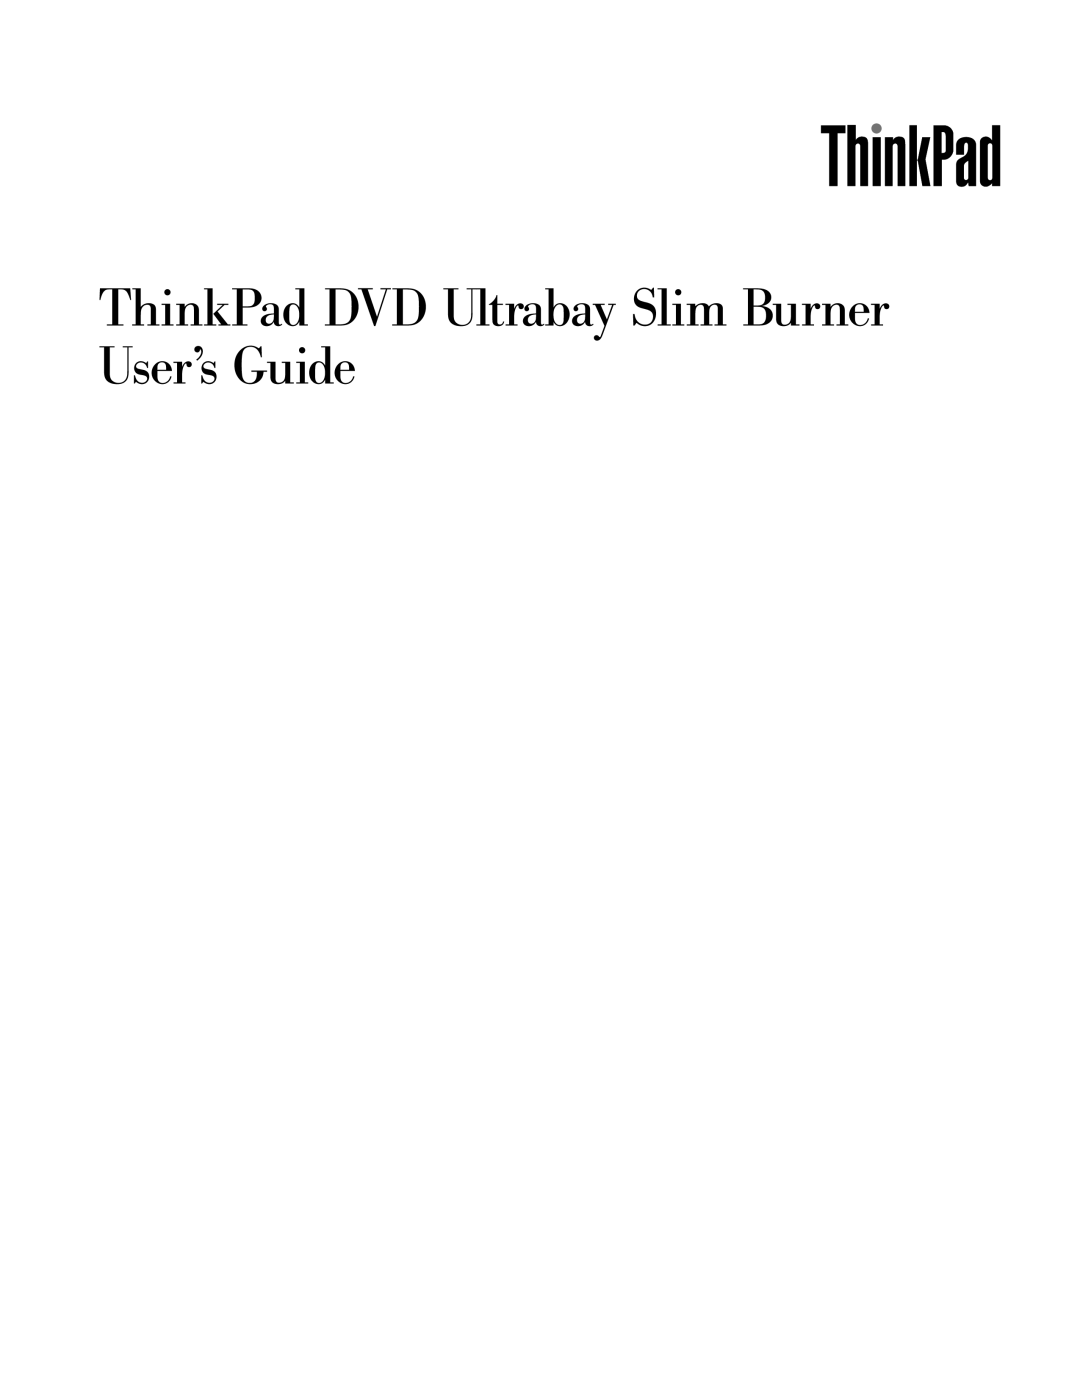 Lenovo 41N5647 manual ThinkPad DVD Ultrabay Slim Burner User’s Guide 